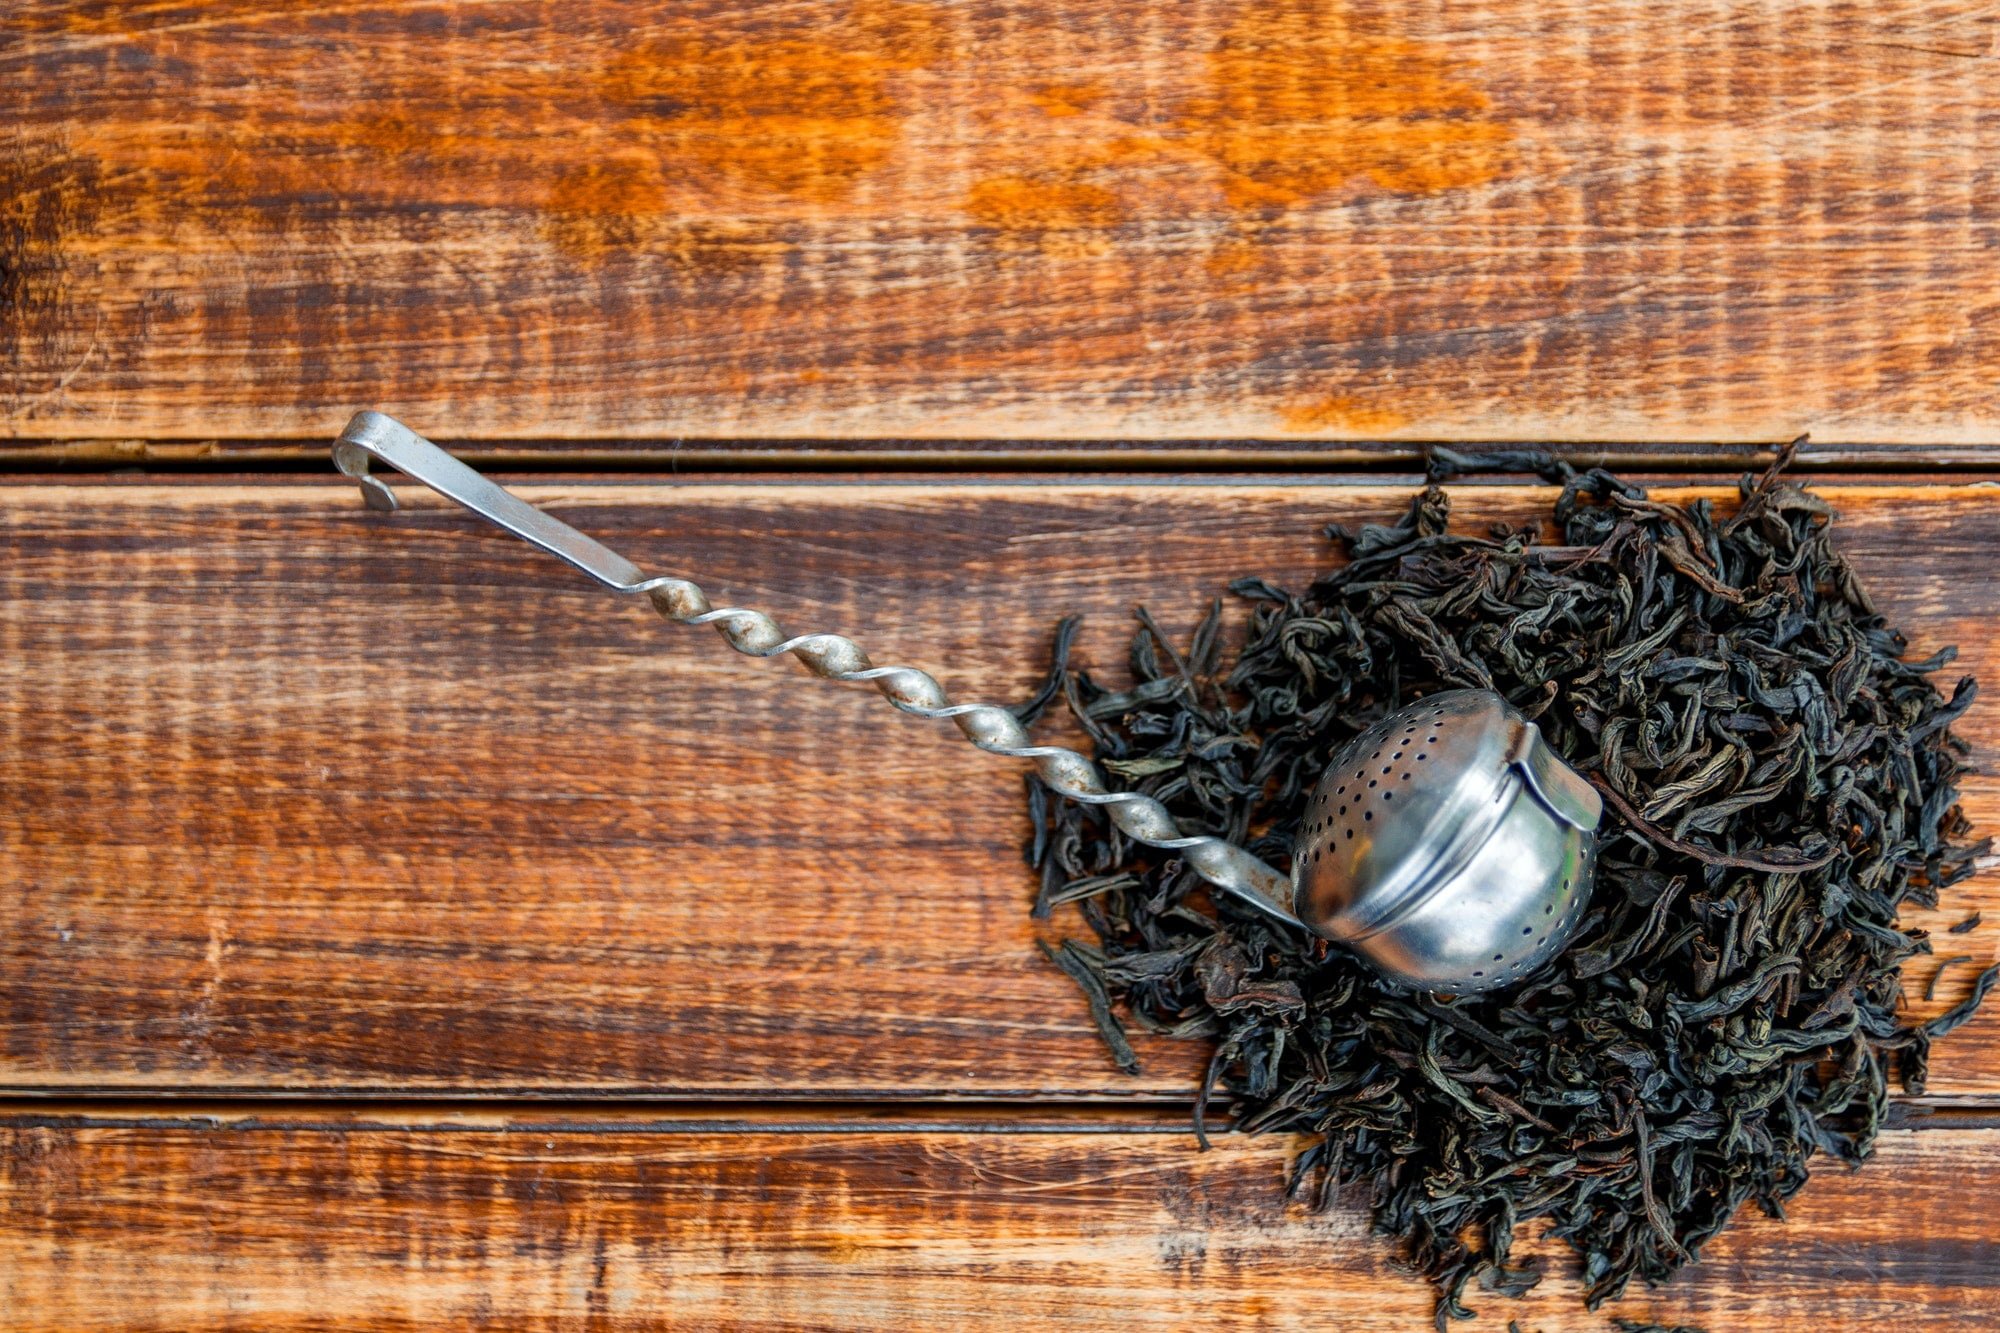 Vintage strainer with dry leaves of black tea on wooden